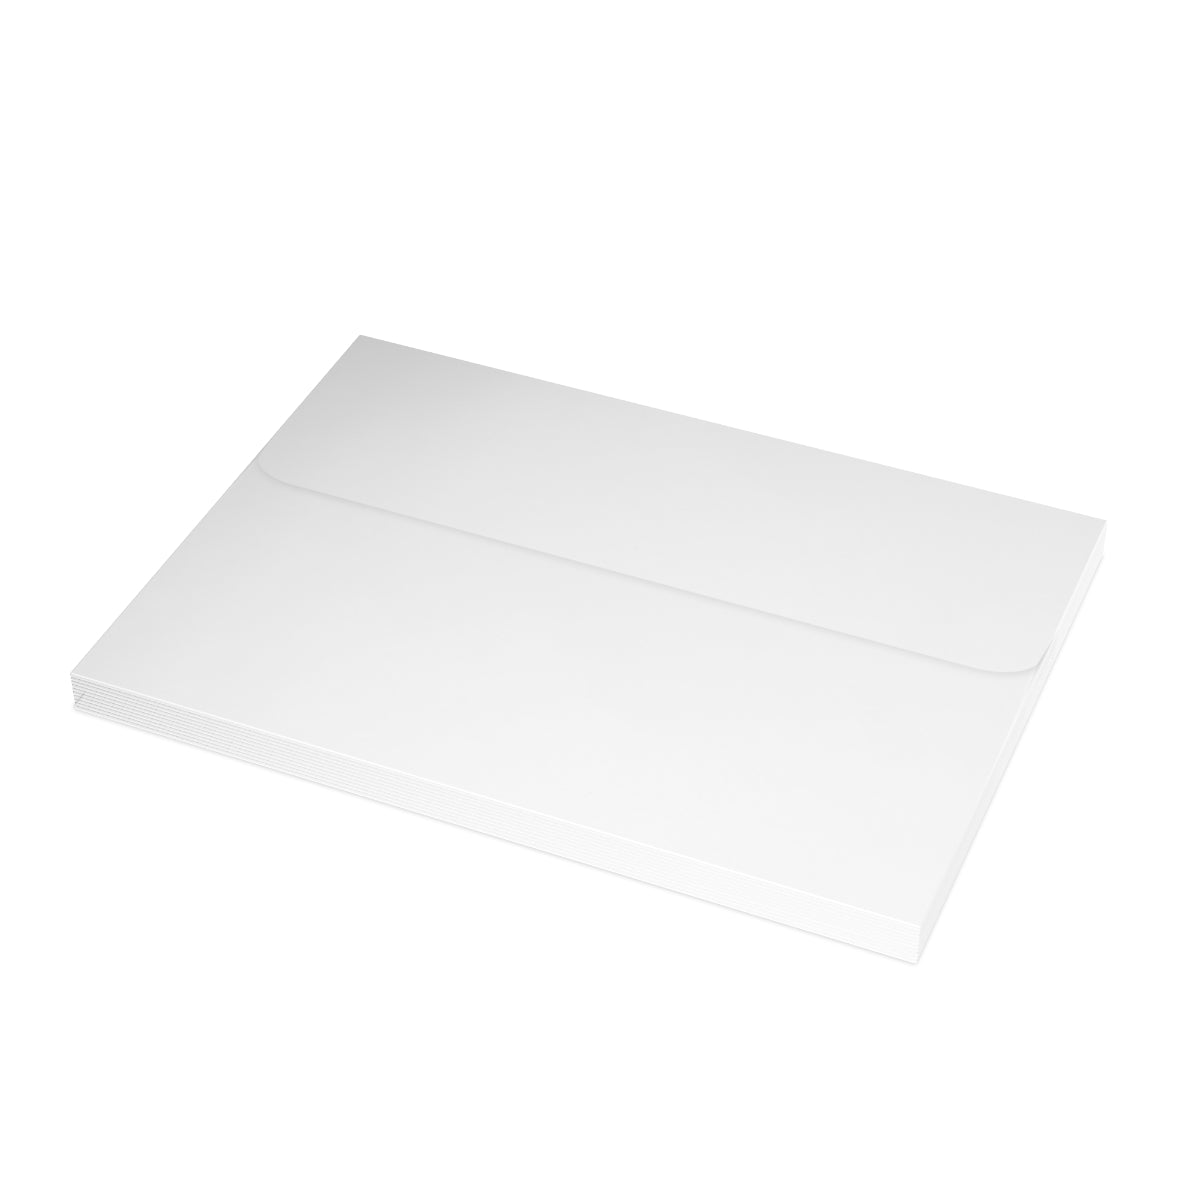 New Orleans Folded Greeting Cards + Envelopes (10pcs)